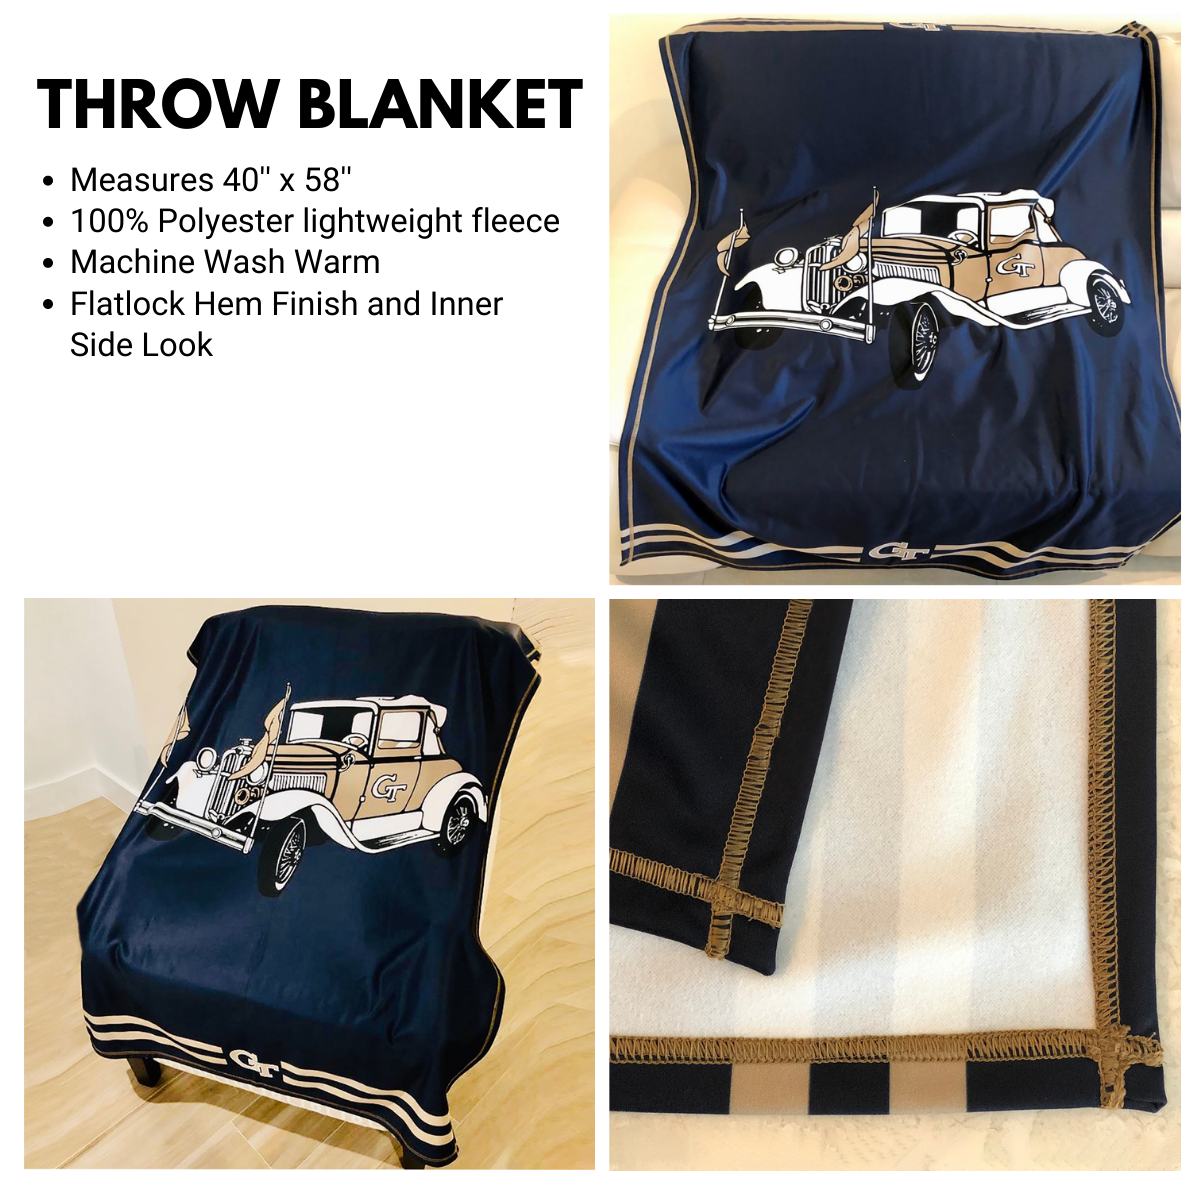 Northern Kentucky Norse Game Day Soft Premium Fleece Black Throw Blanket 40 x 58 Logo and Stripes